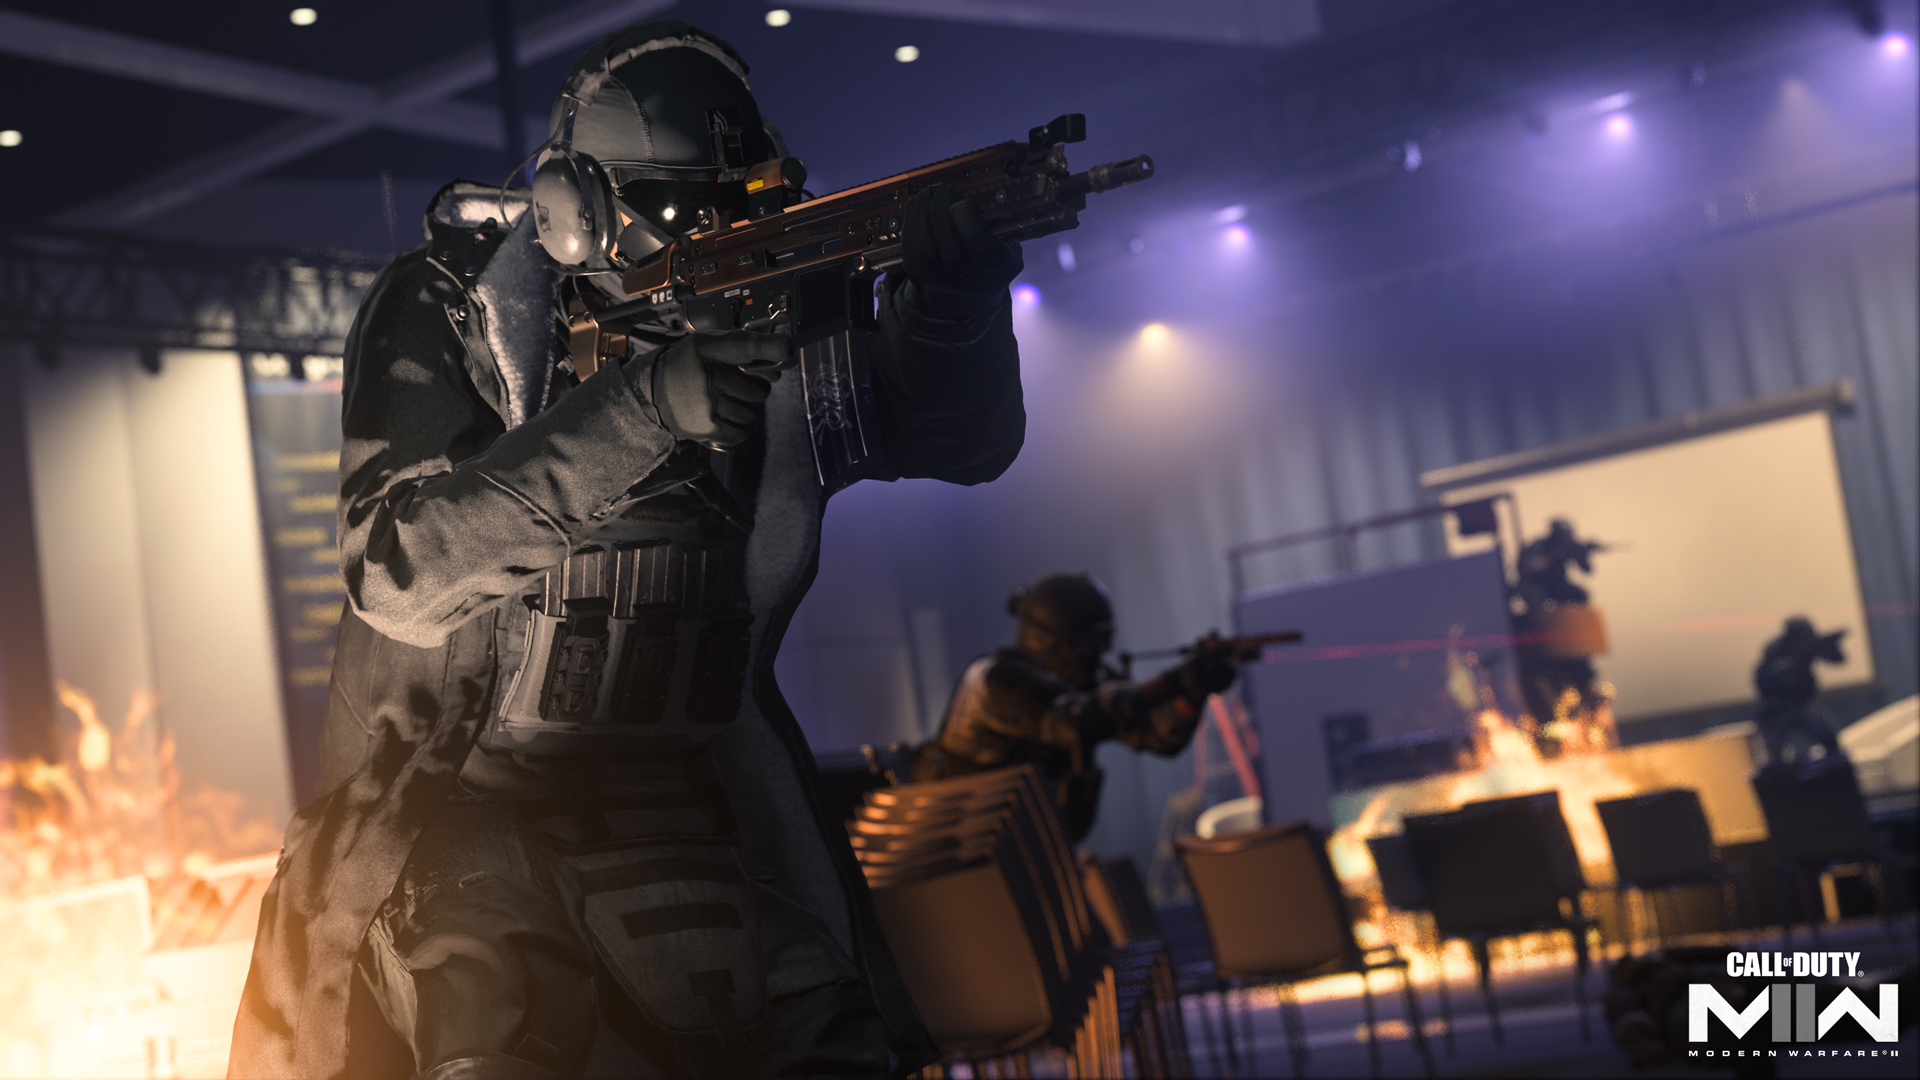 Call of Duty: Modern Warfare 3's multiplayer trailer begins new